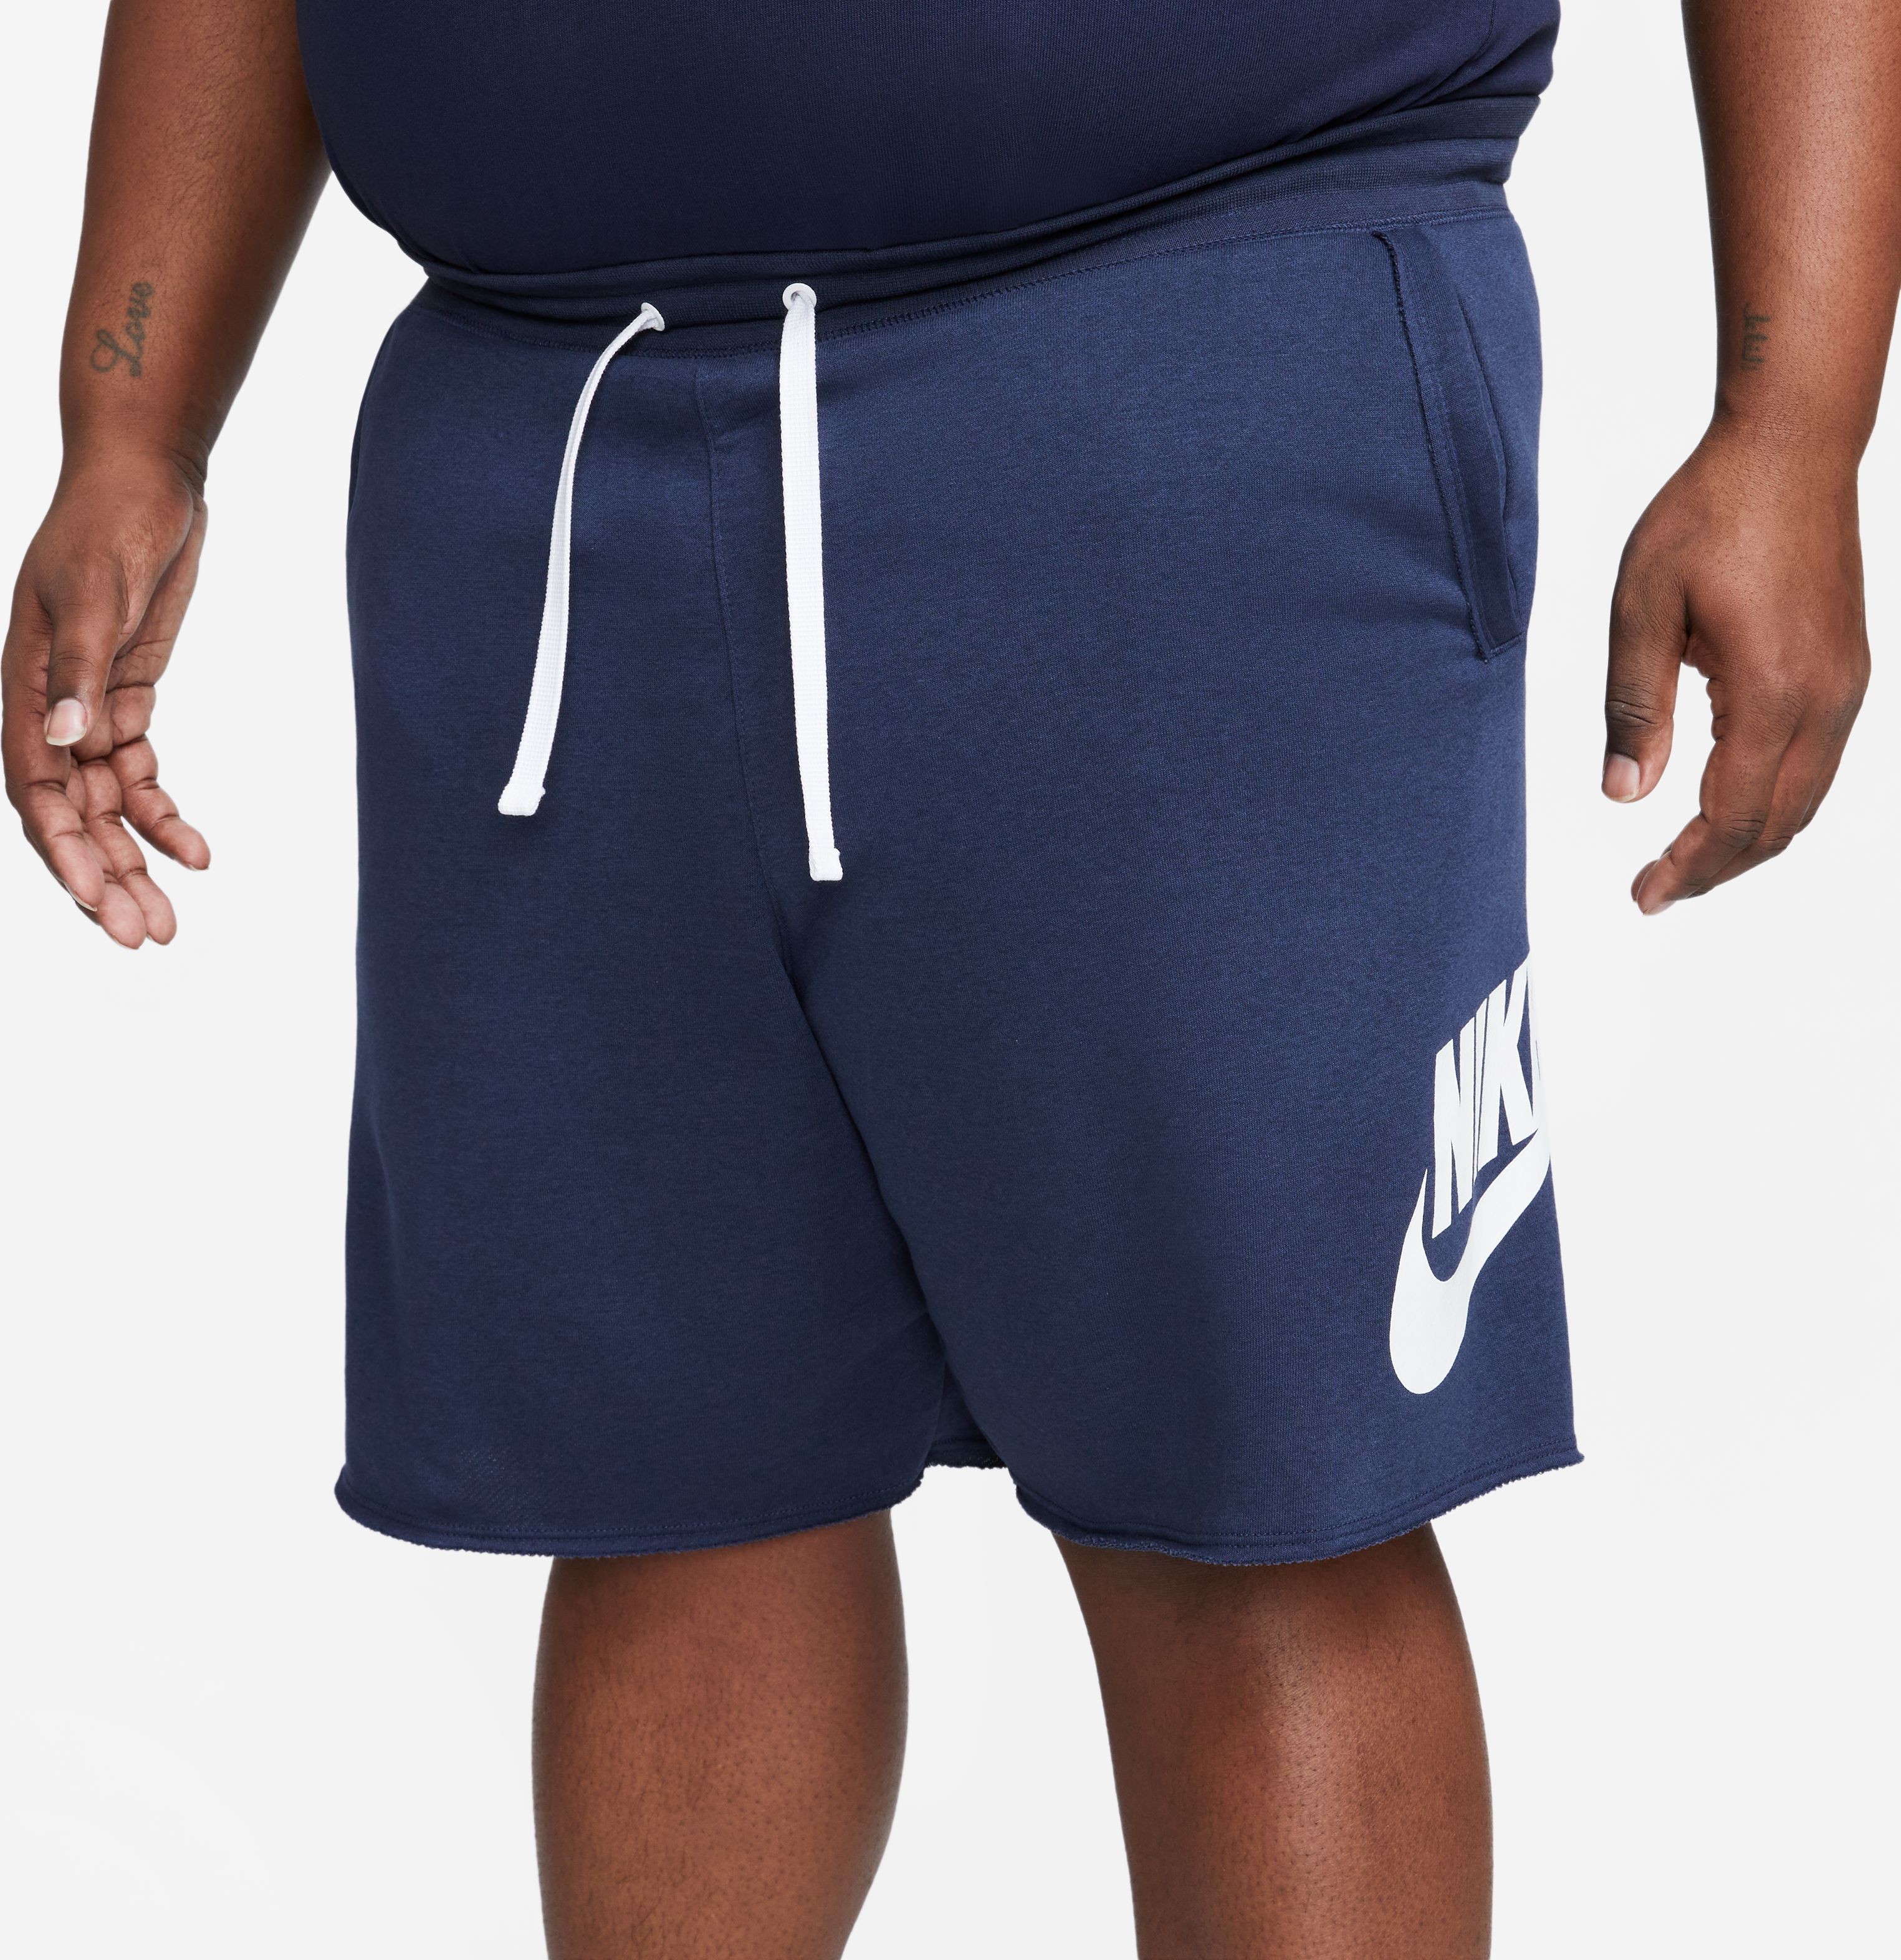 Club Nike Hbr : azul hombre de - M prochampions Referencia Short Alumni Pantaloneta lifestyle DX0502-410 Nk Ft